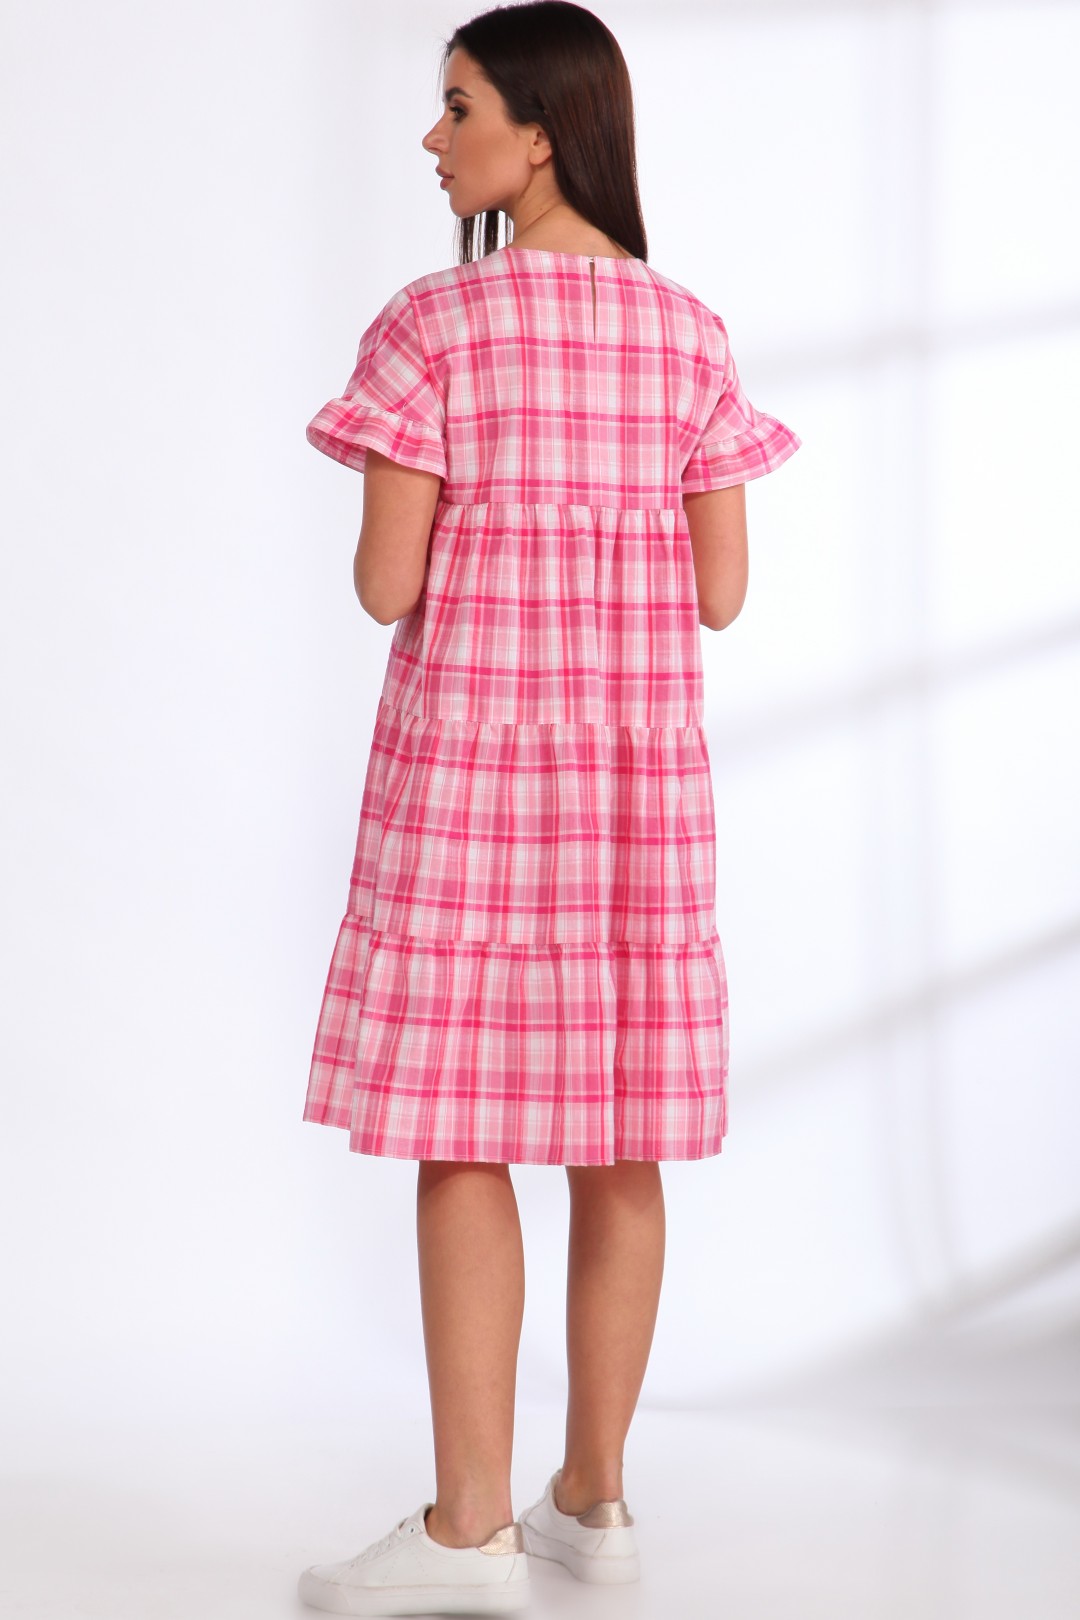 Платье Angelina & Company 537р розовая клетка